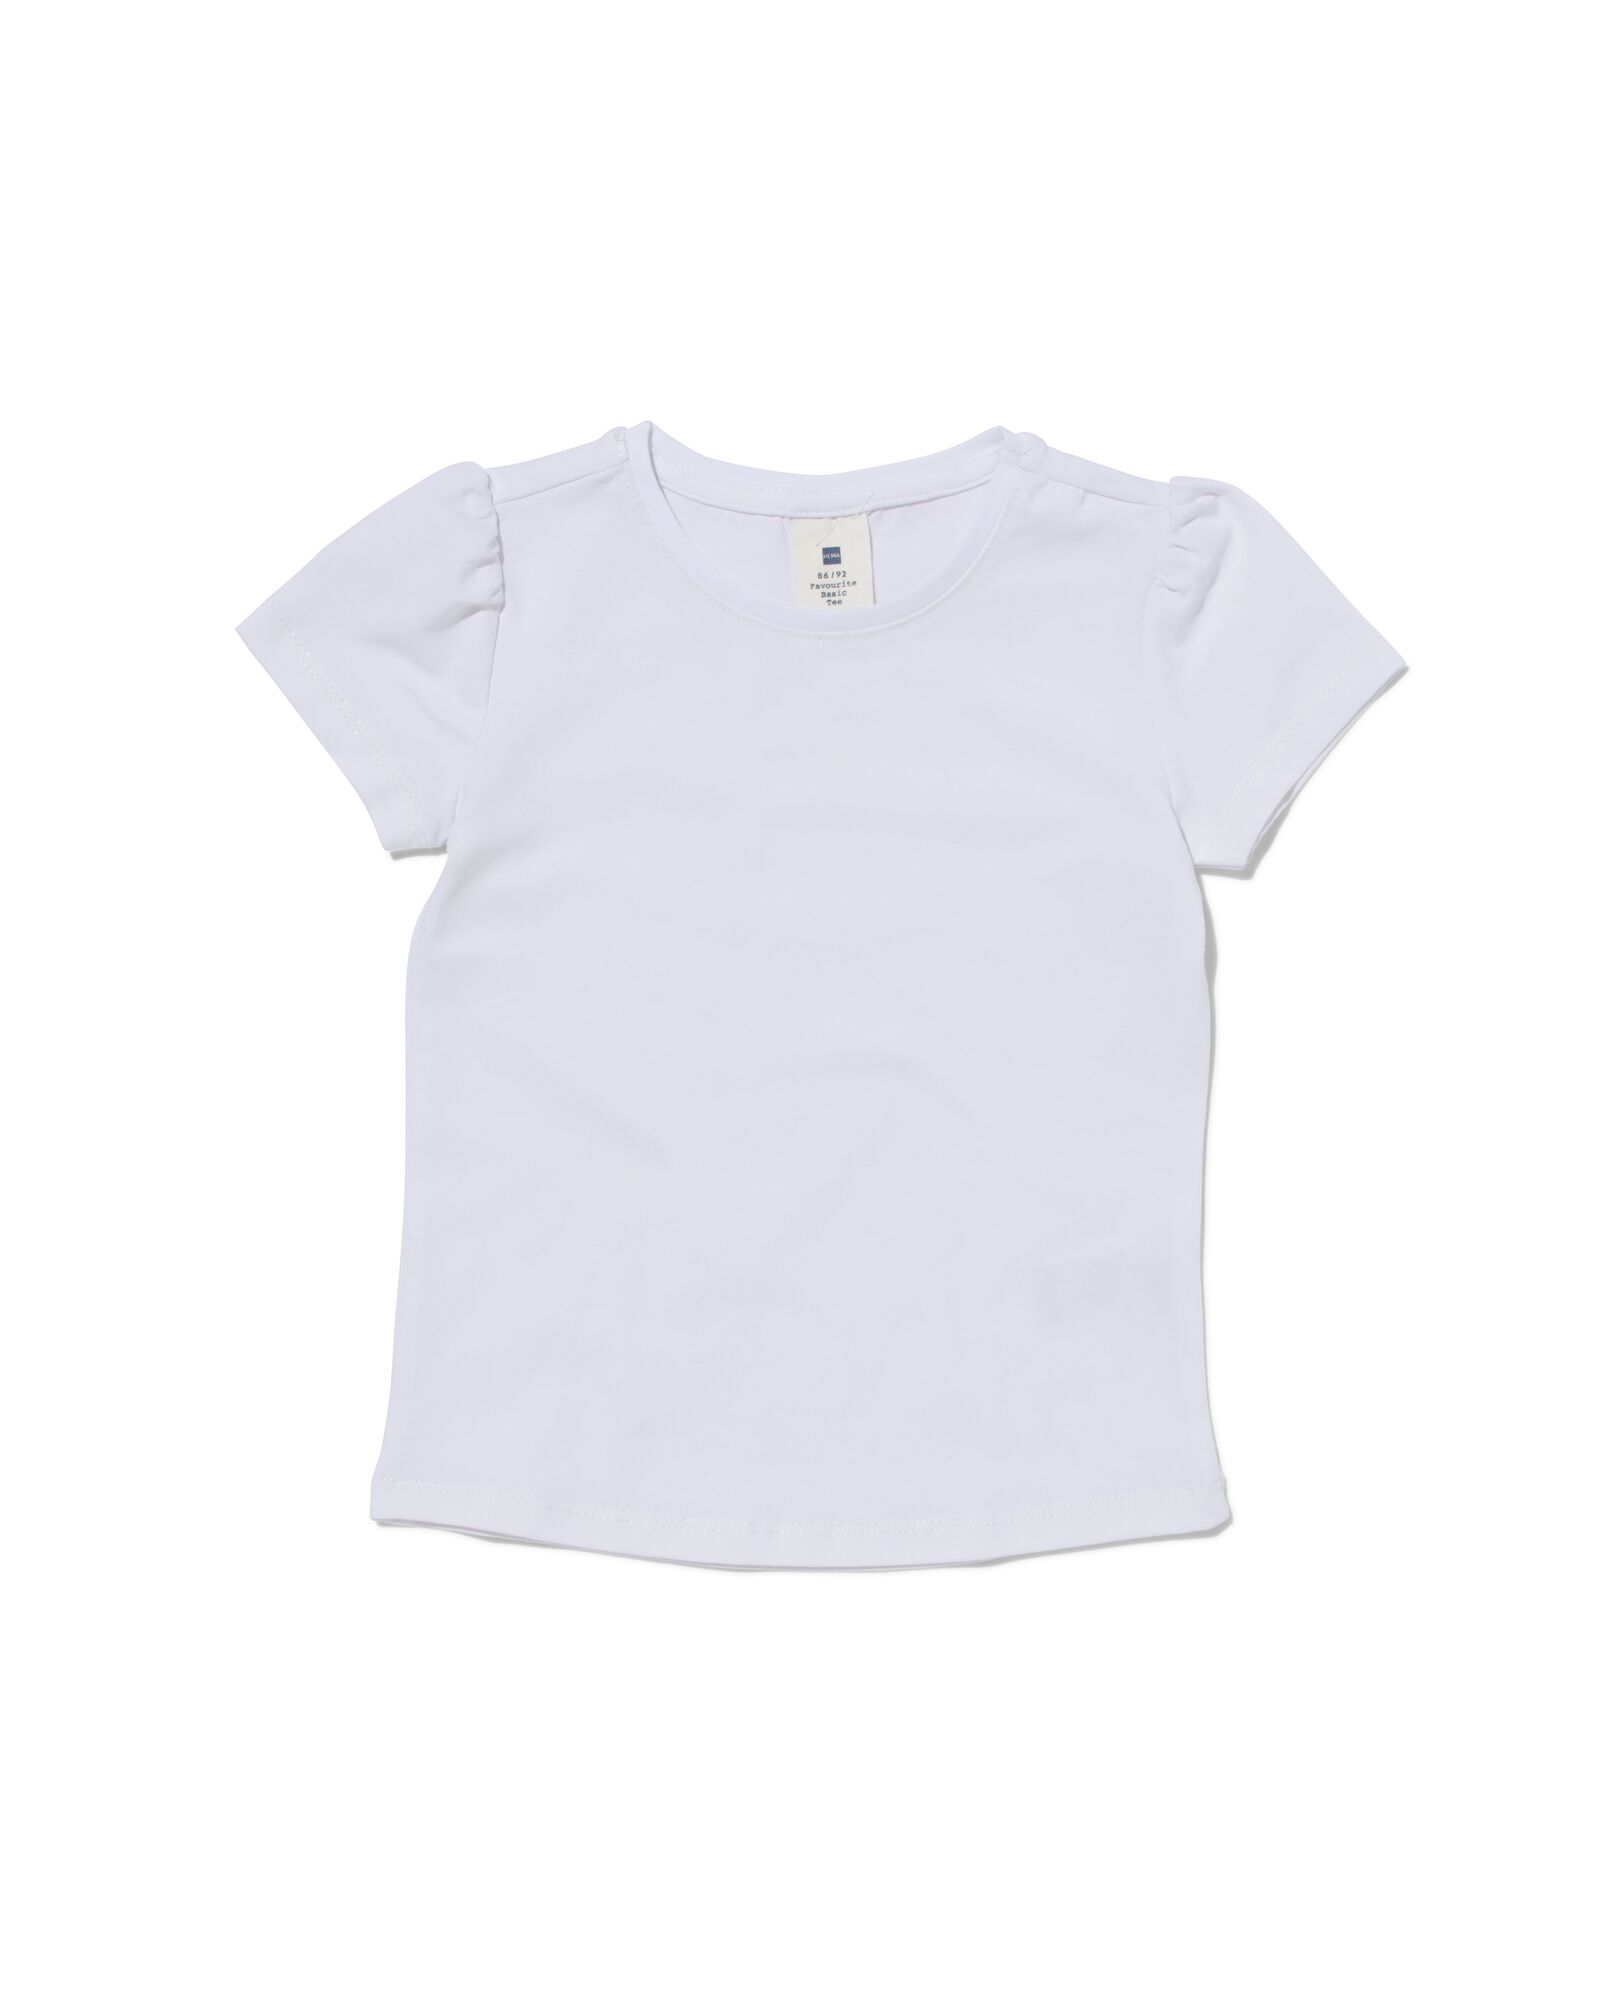 Kinder-T-Shirts 2er-Pack - weiß HEMA